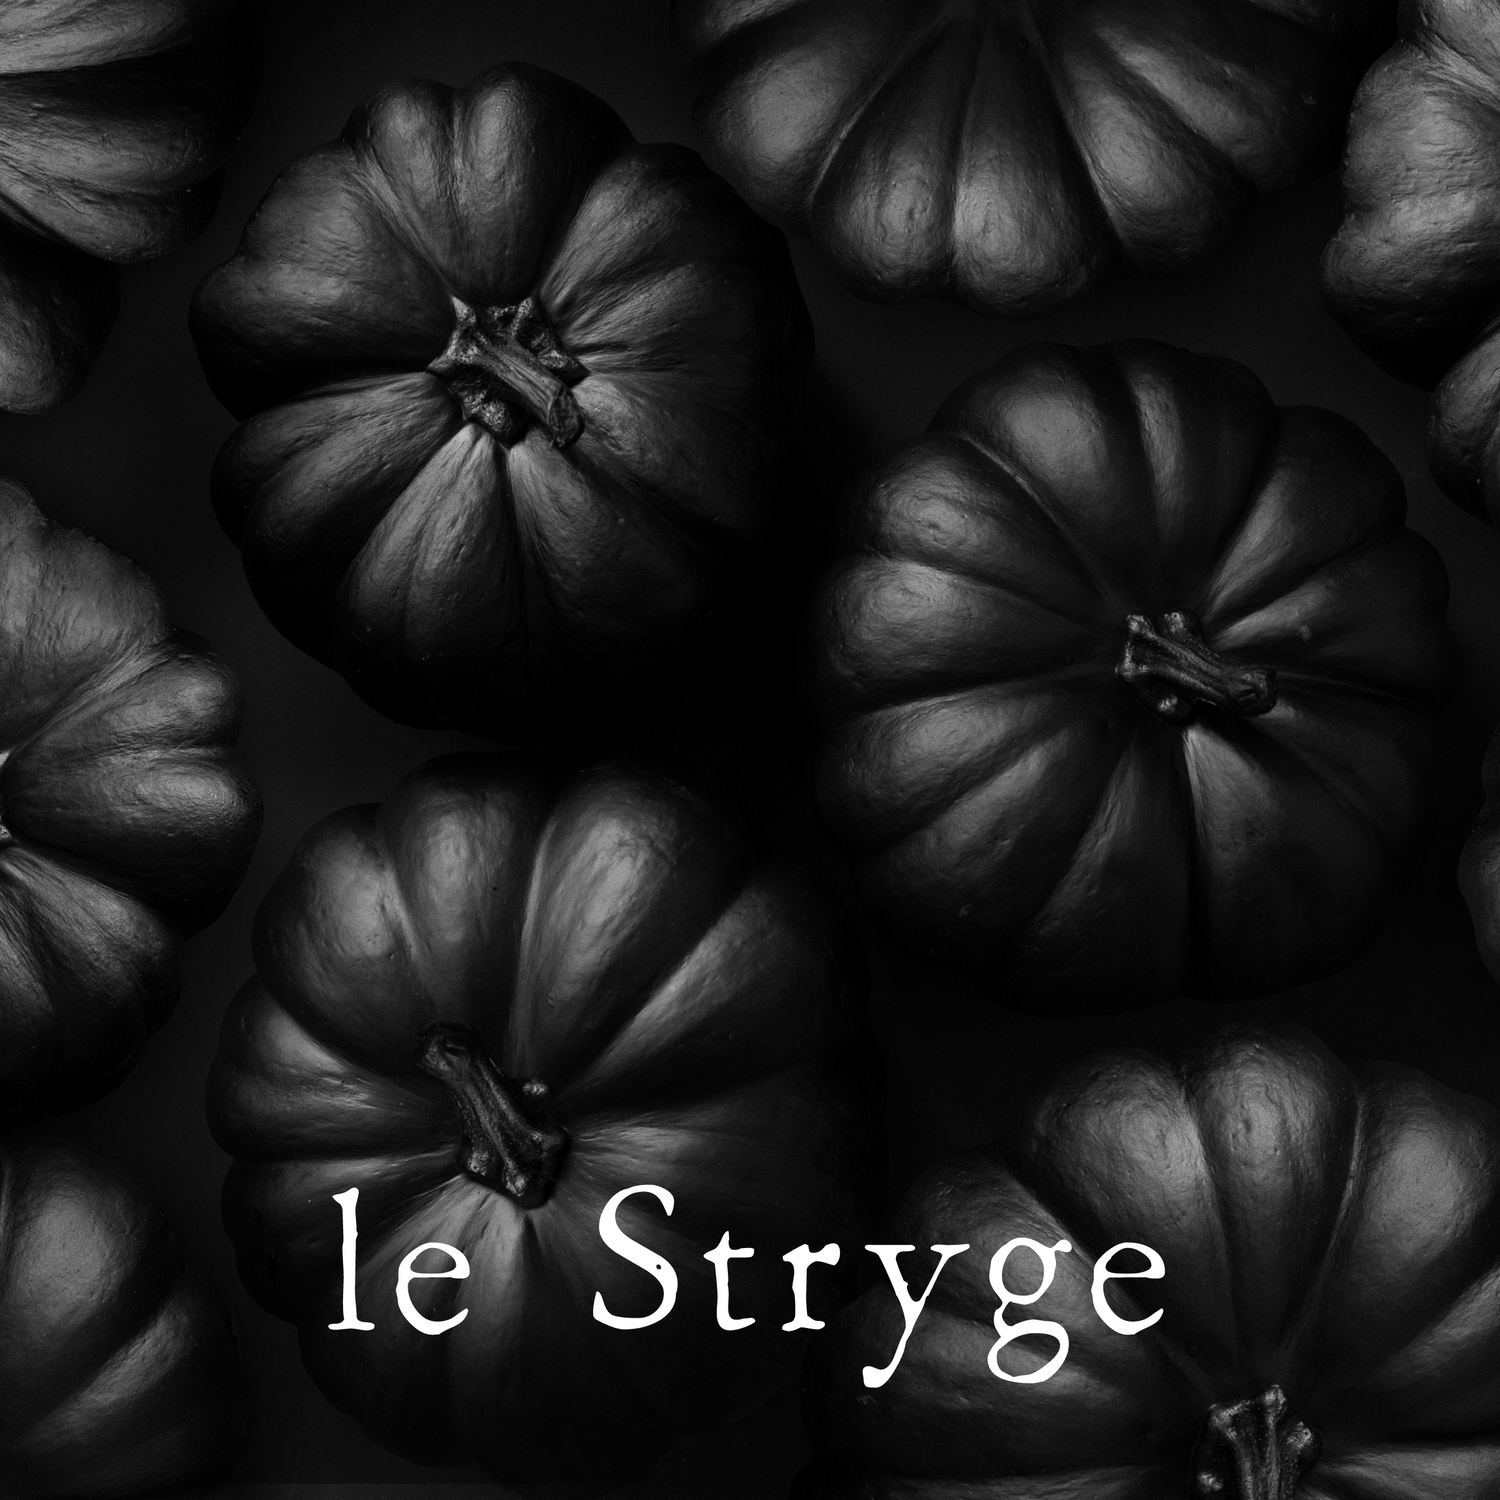 Le Stryge Black Pumpkin Candle |  Home Fragrances and Decor